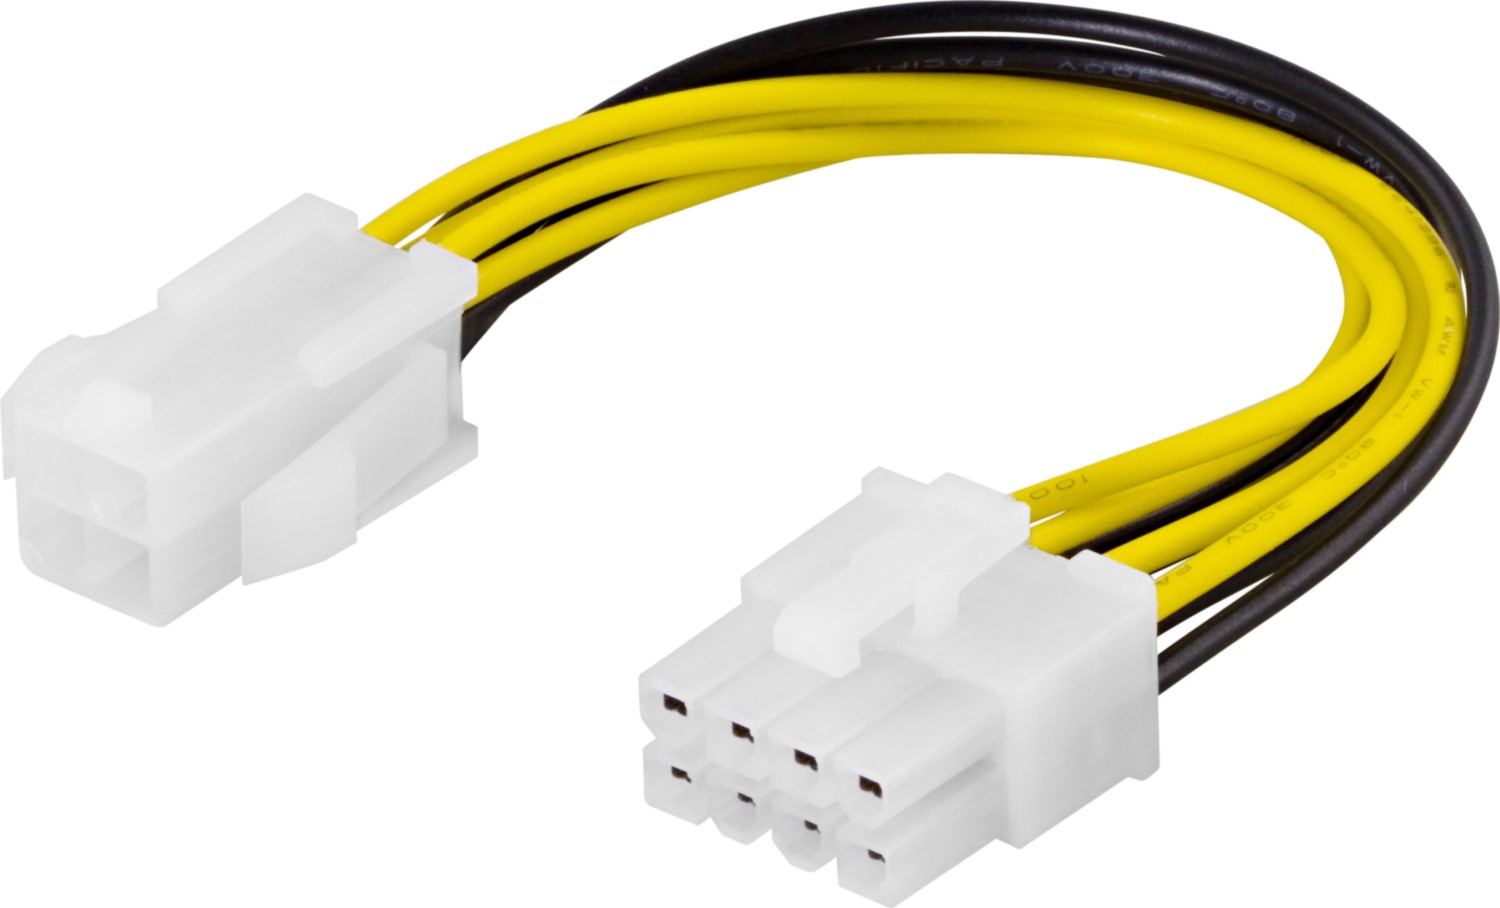 Adapter cable 4-pin ATX12V to 8-pin EPS12V 10cm